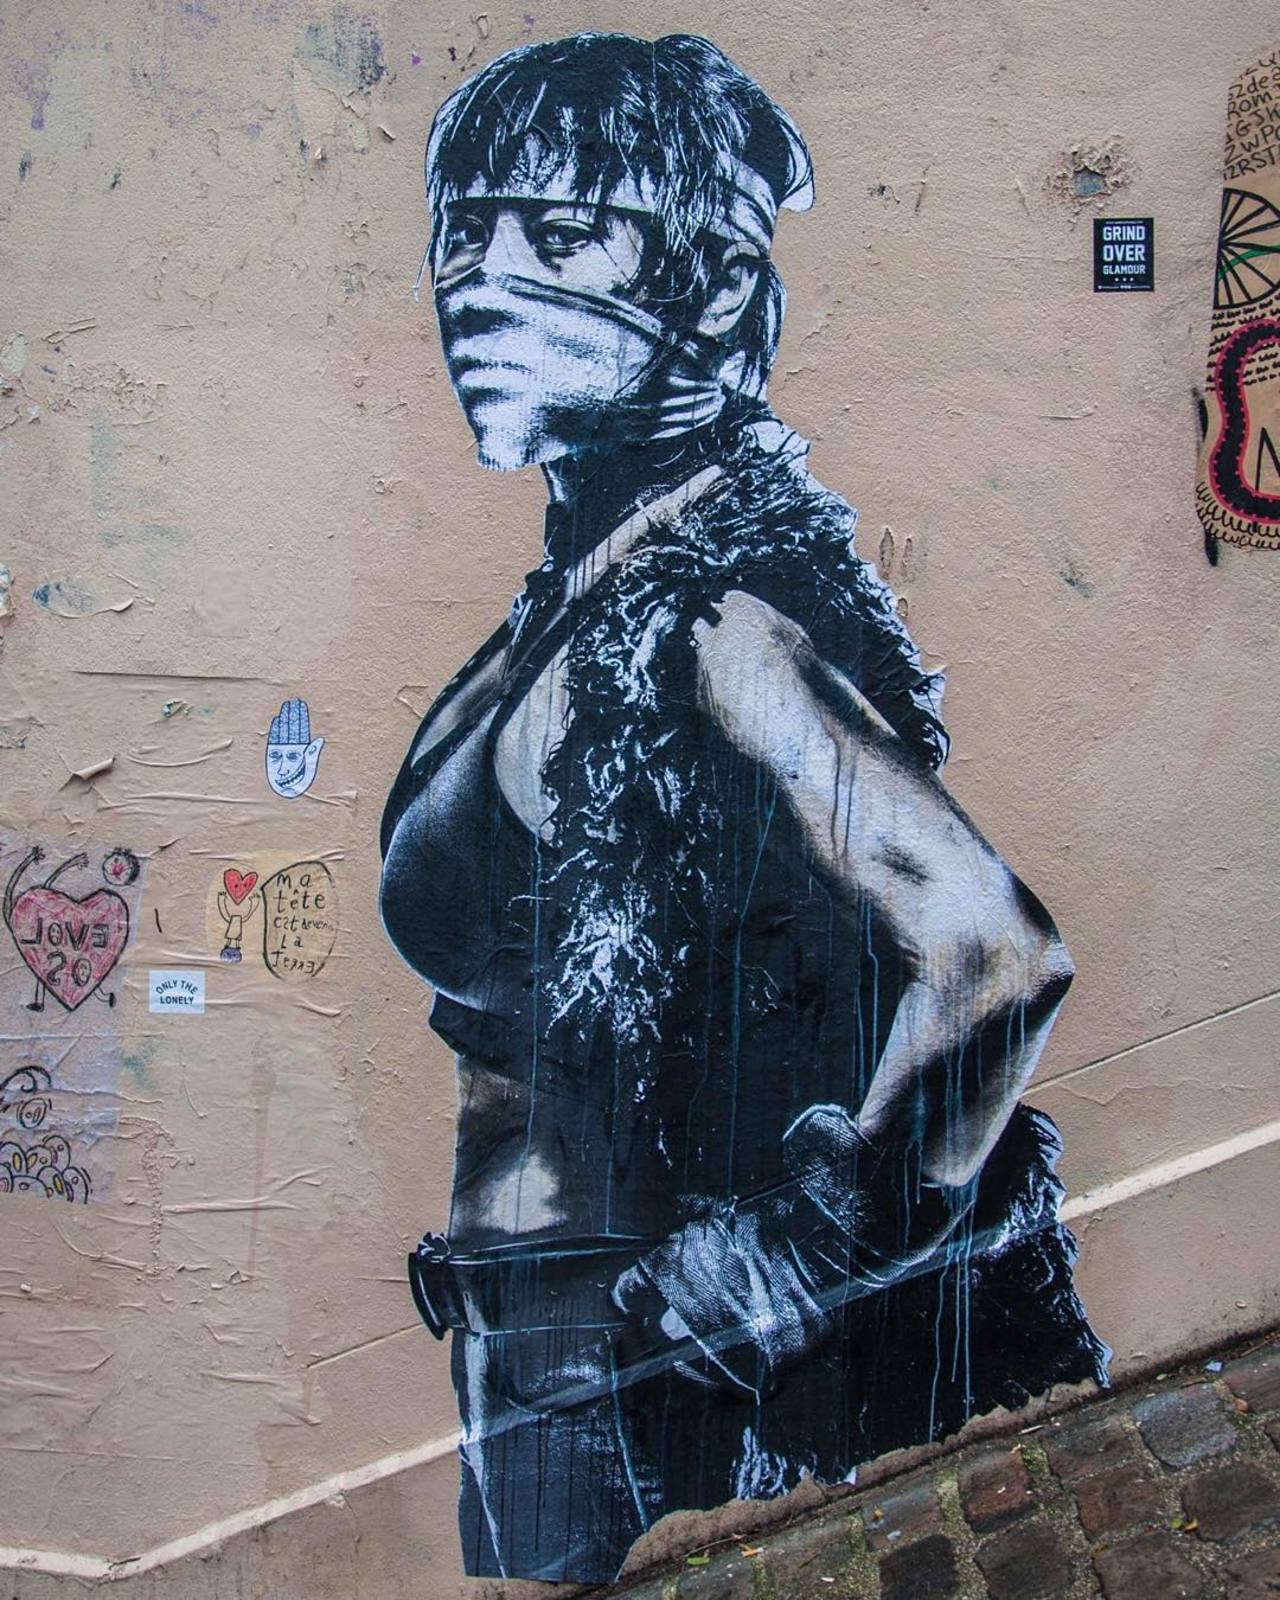 #Paris #graffiti photo by @vgsman http://ift.tt/1MgwHUQ #StreetArt https://t.co/eQA9mUnAmX